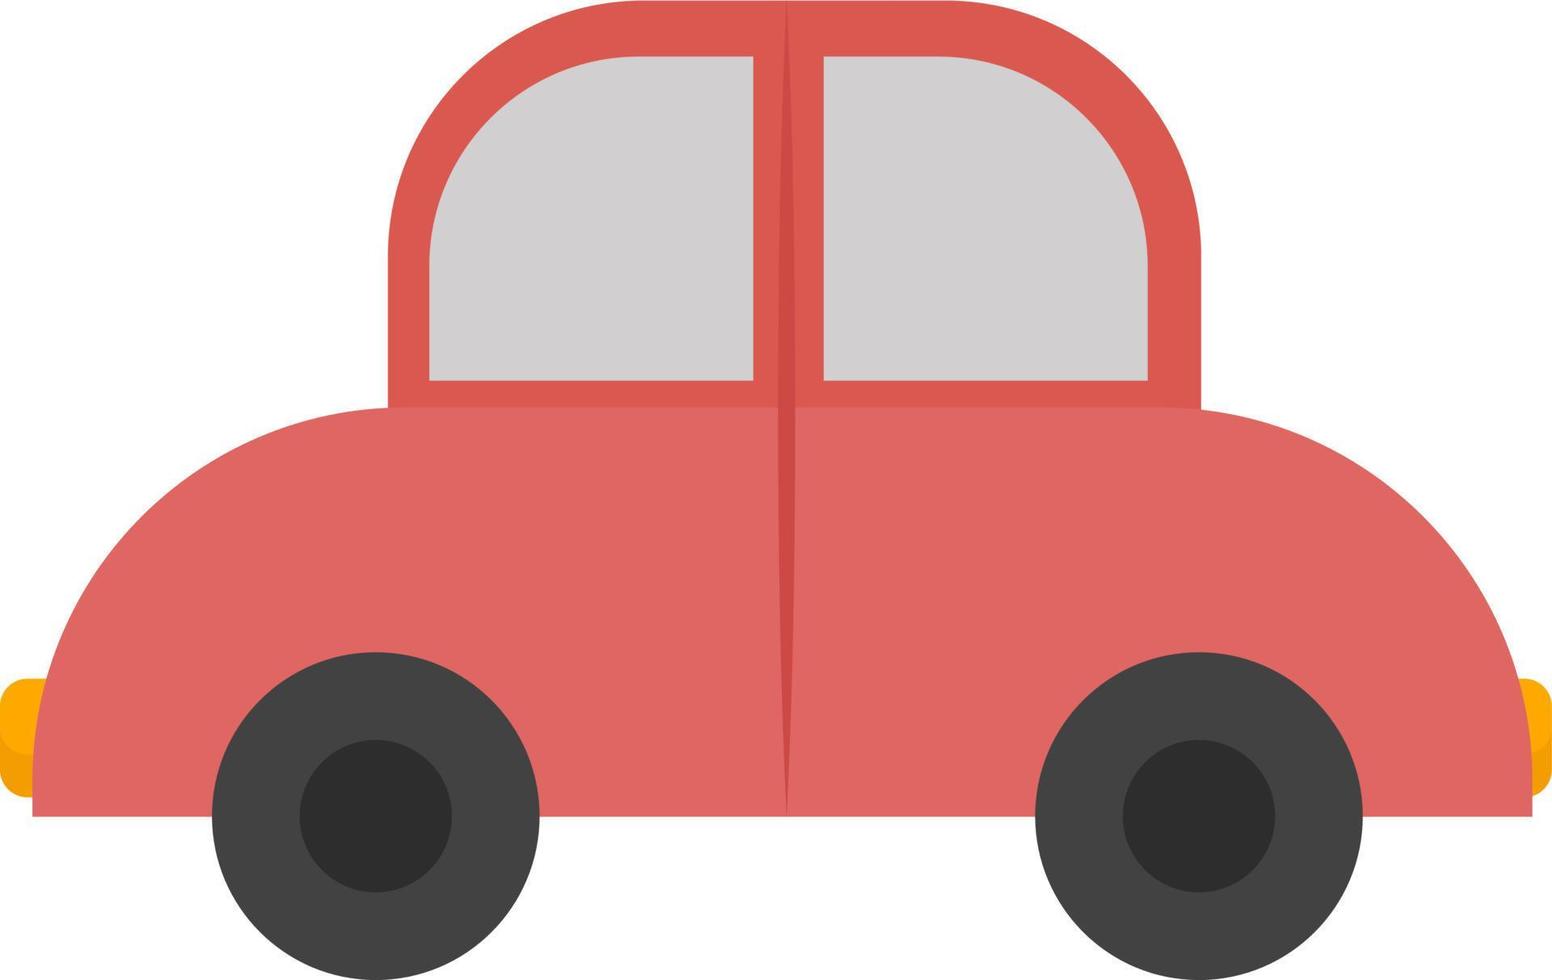 Red car, illustration, vector on white background.